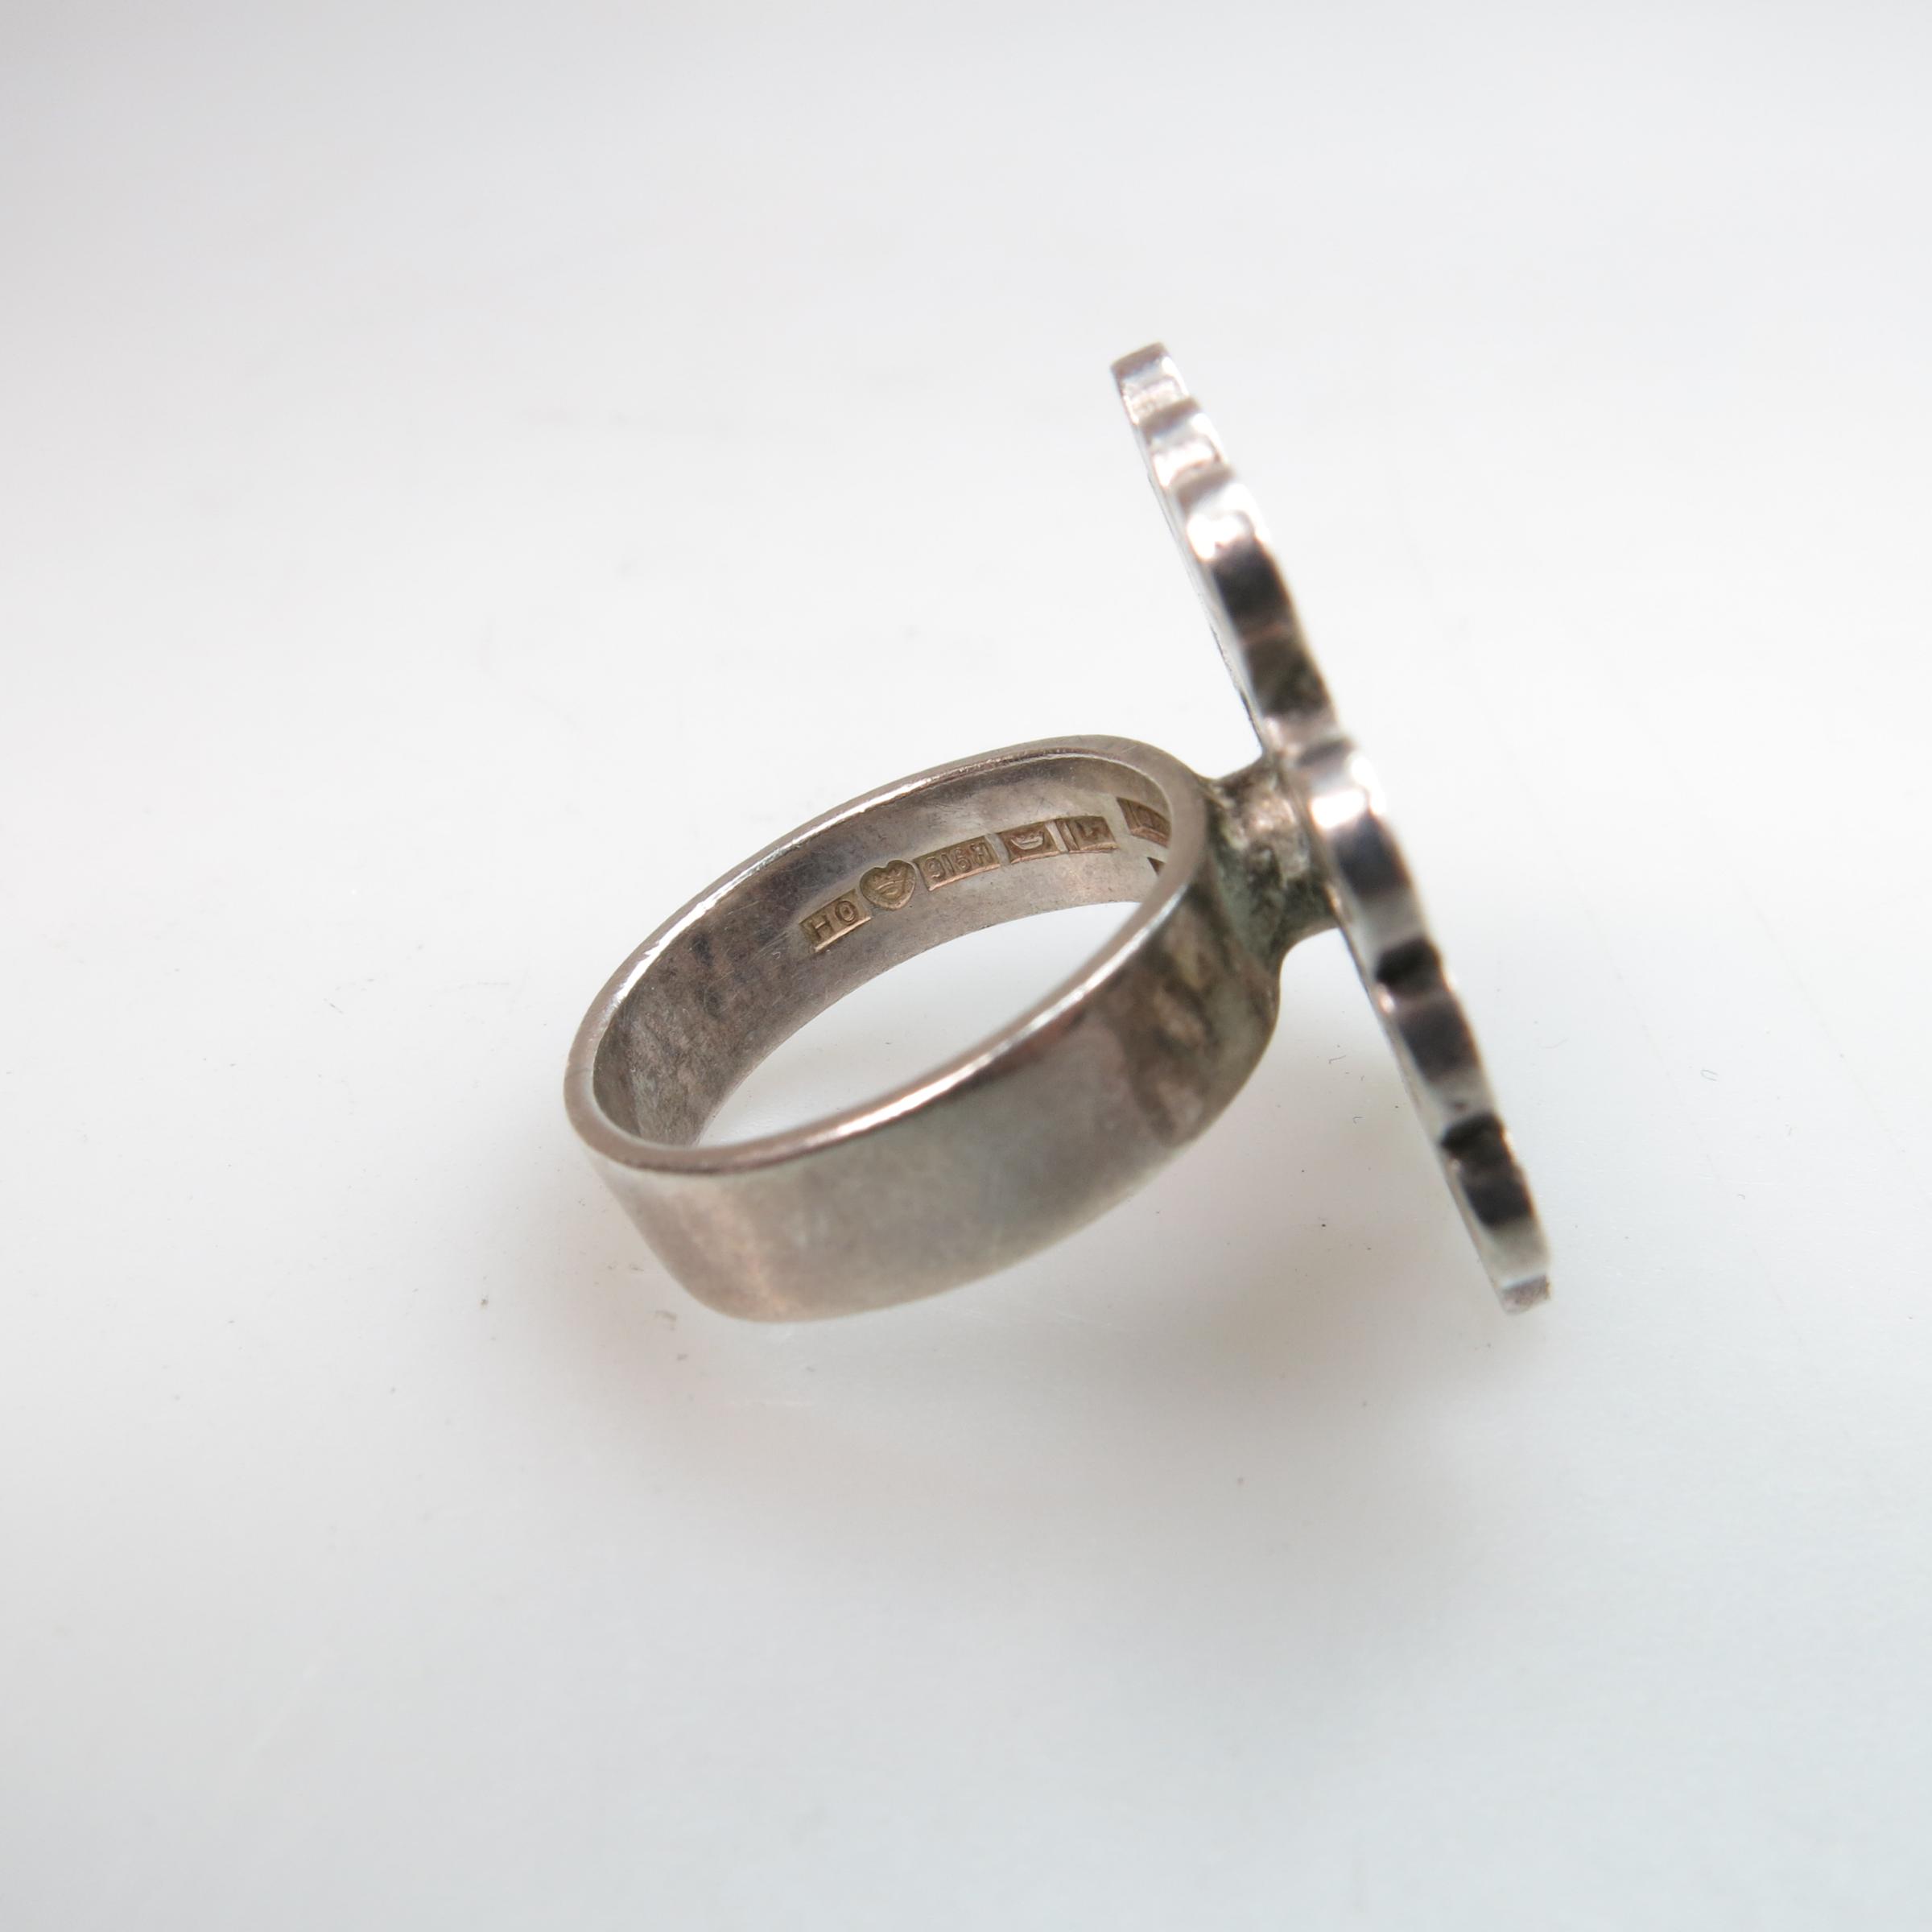 Three Finnish Silver Rings